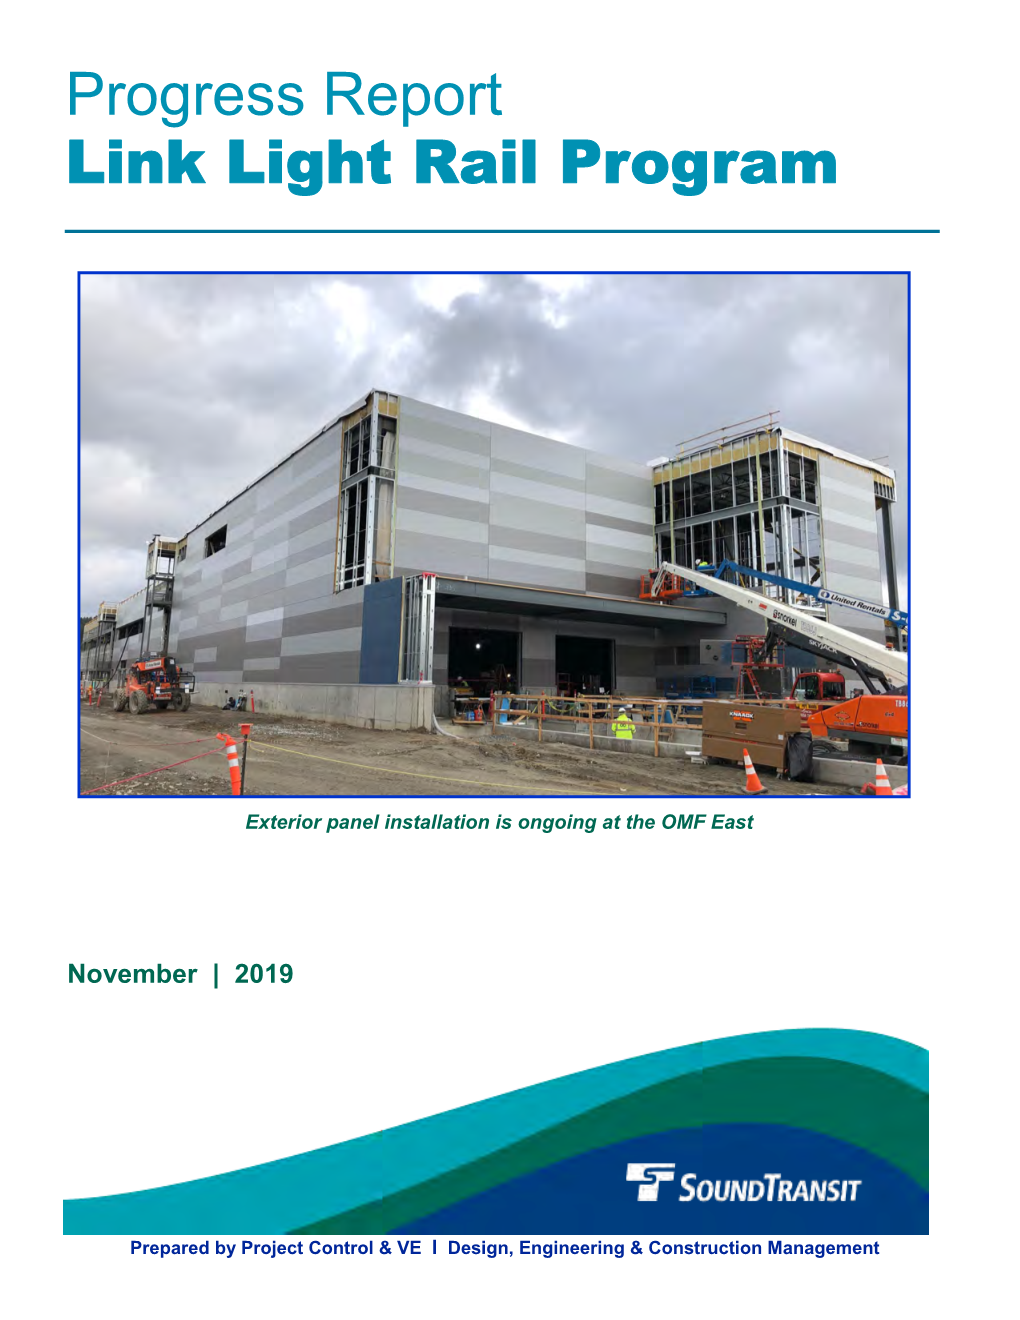 November 2019 Link Progress Report